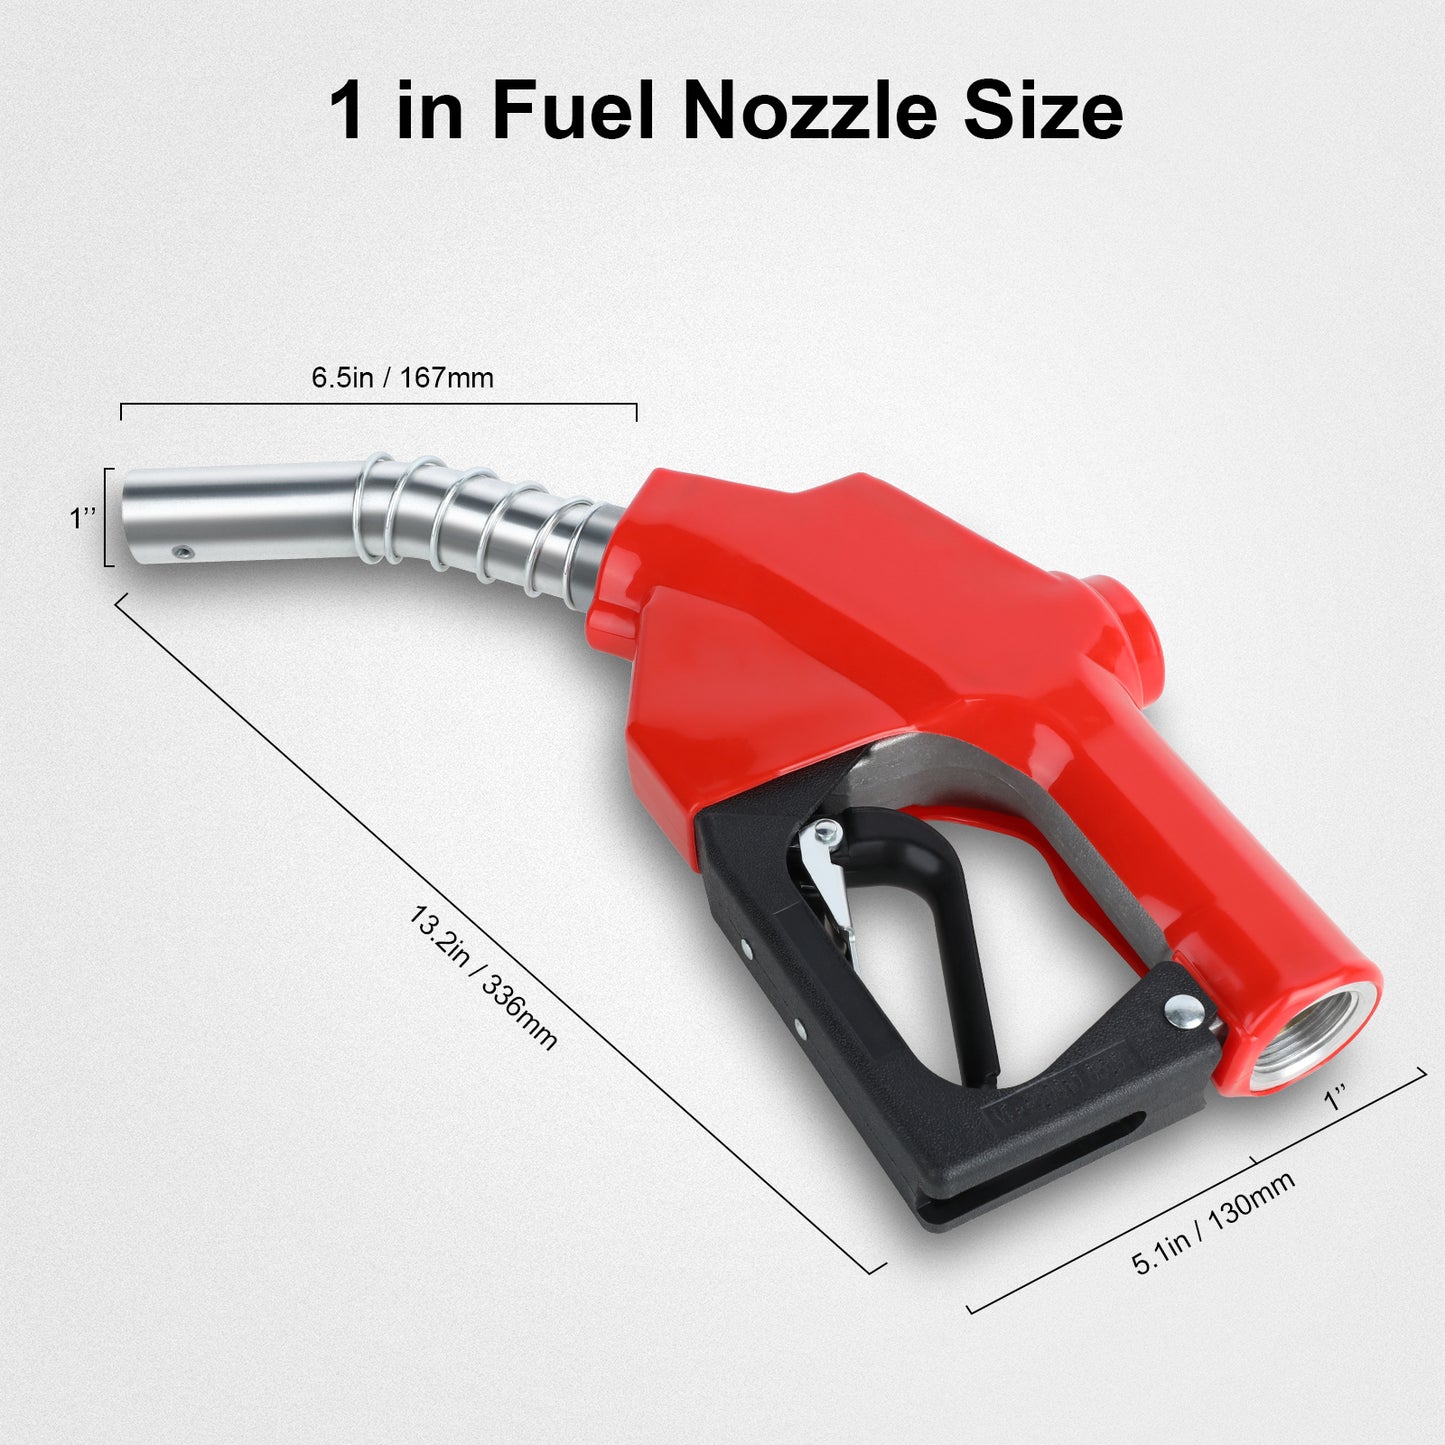 1" NPT Automatic Fuel Nozzle, Auto Shut Off, Diesel Kerosene Gasoline Refilling